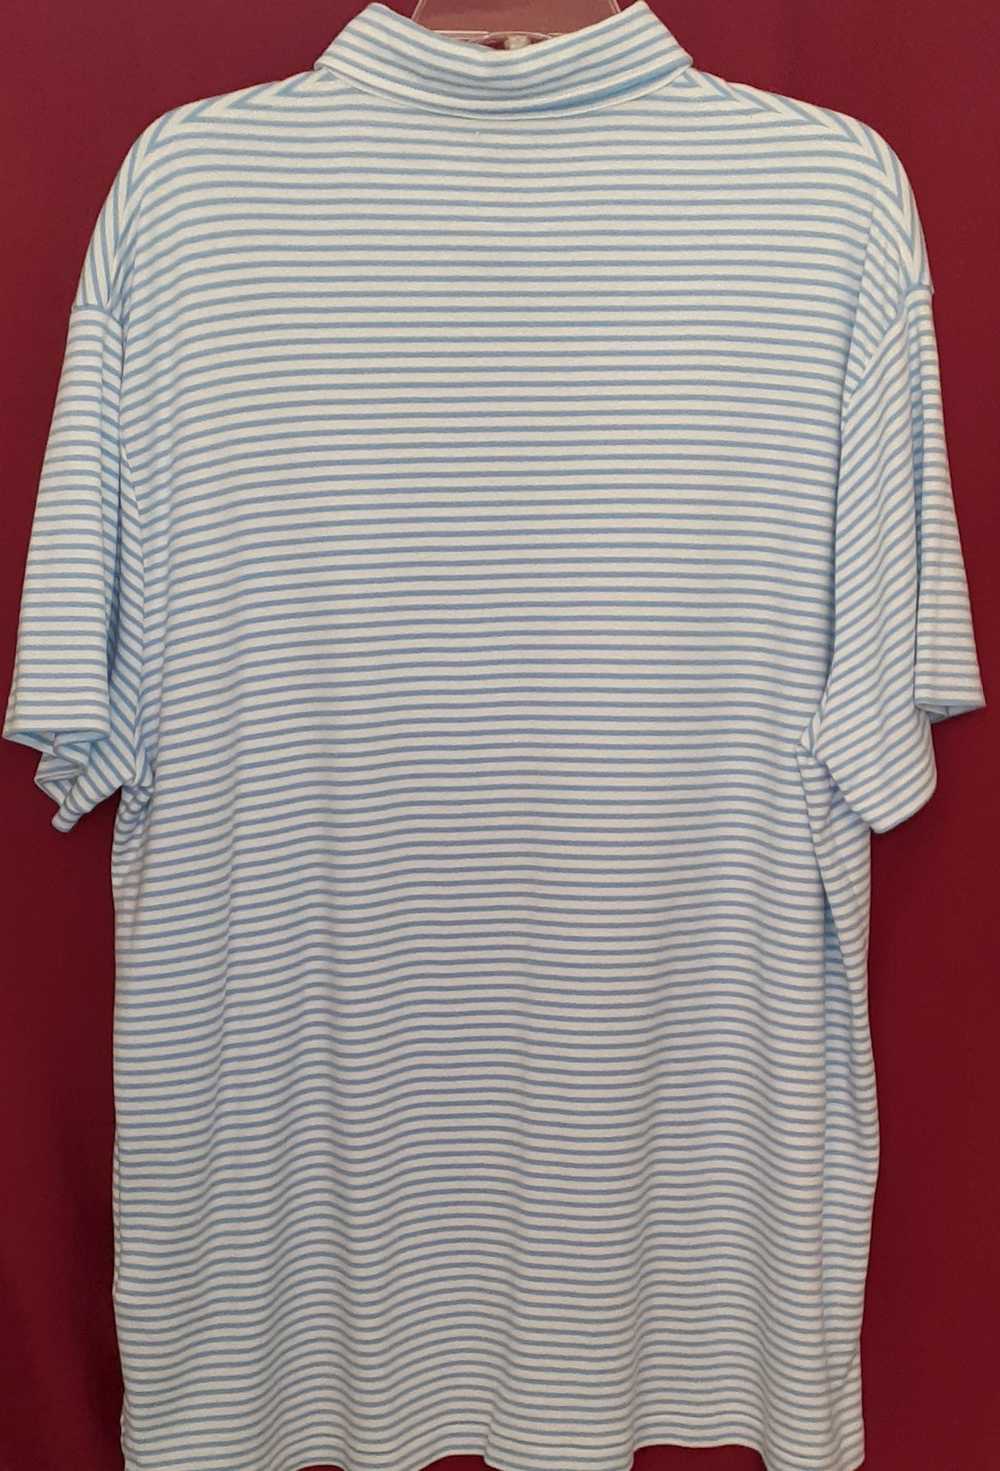 Polo Ralph Lauren Striped Polo shirt - image 5